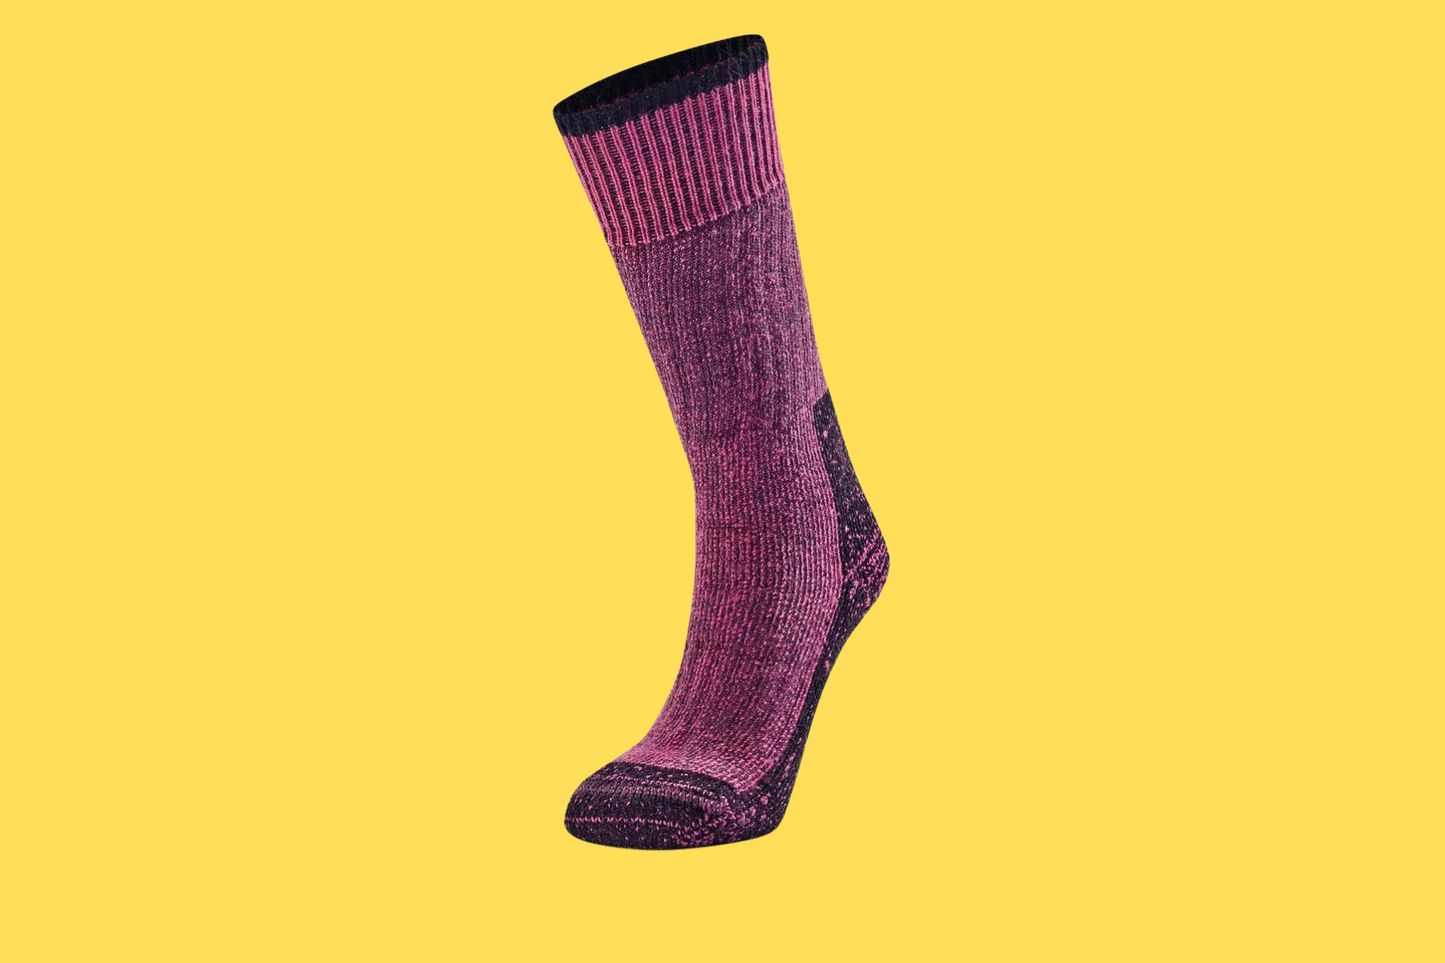 Norsewear Gumboot Socks in Pink (3pk)